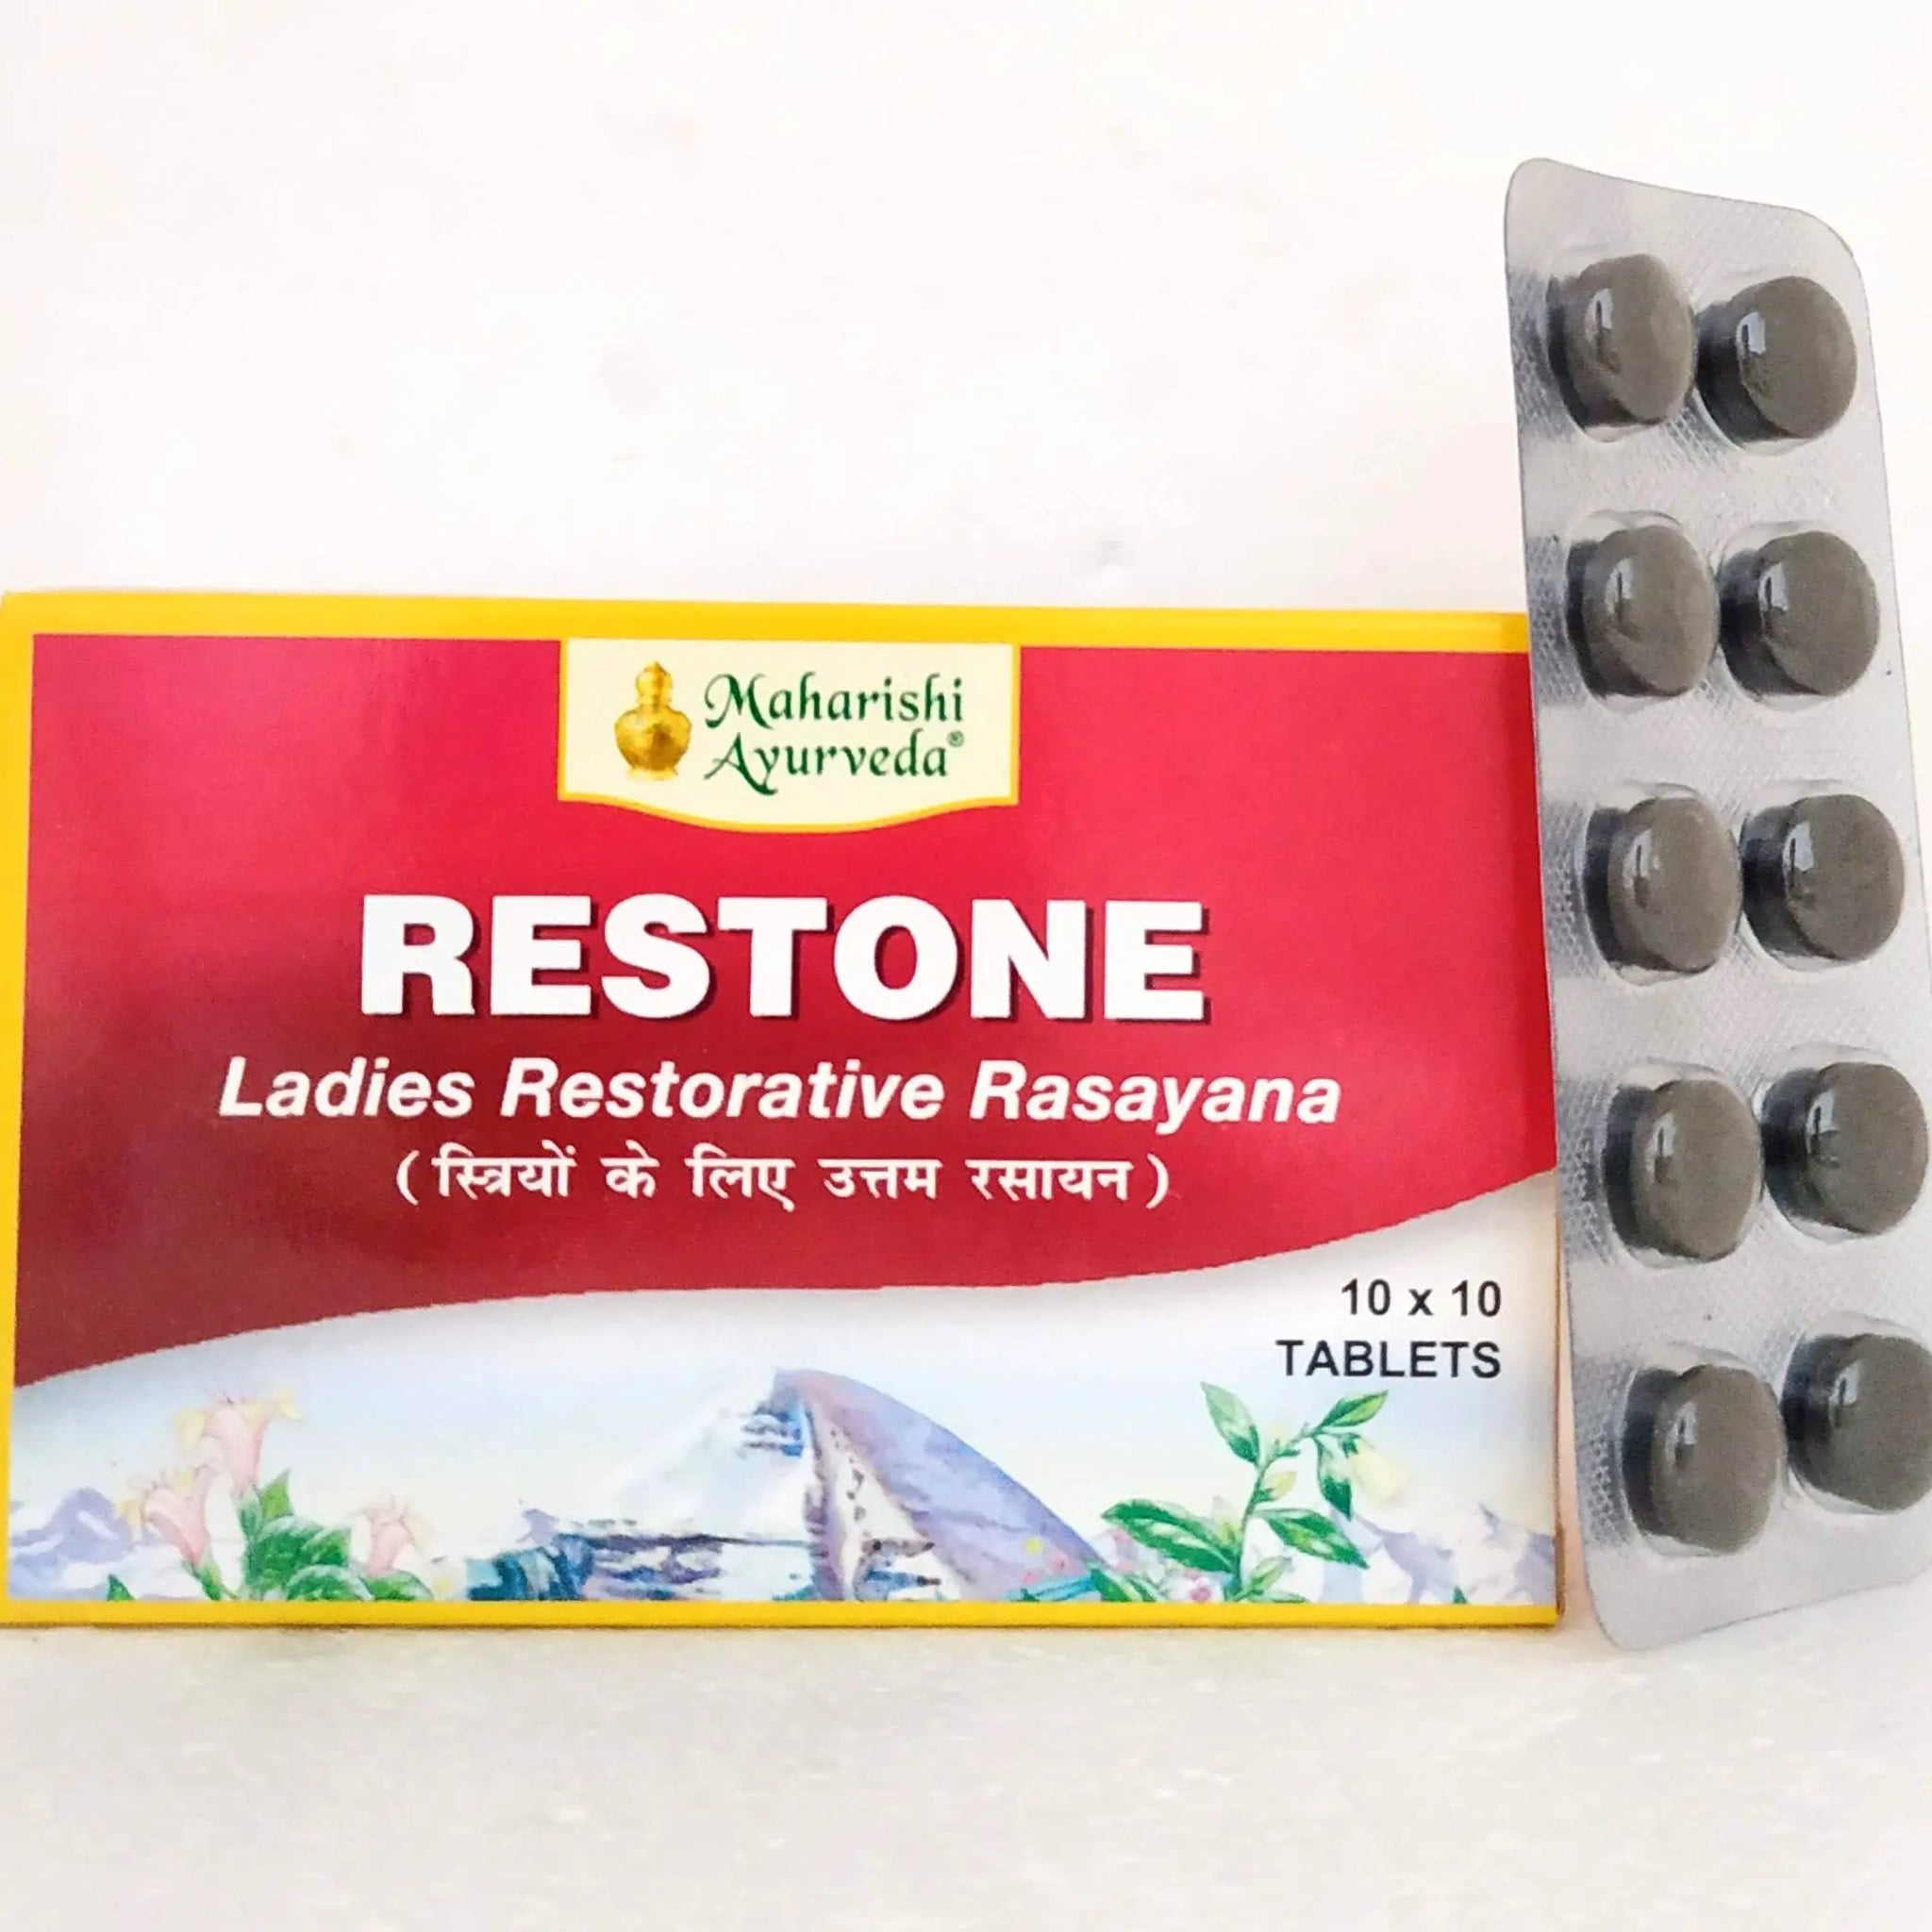 Restone Tablets - 10Tablets Maharishi Ayurveda